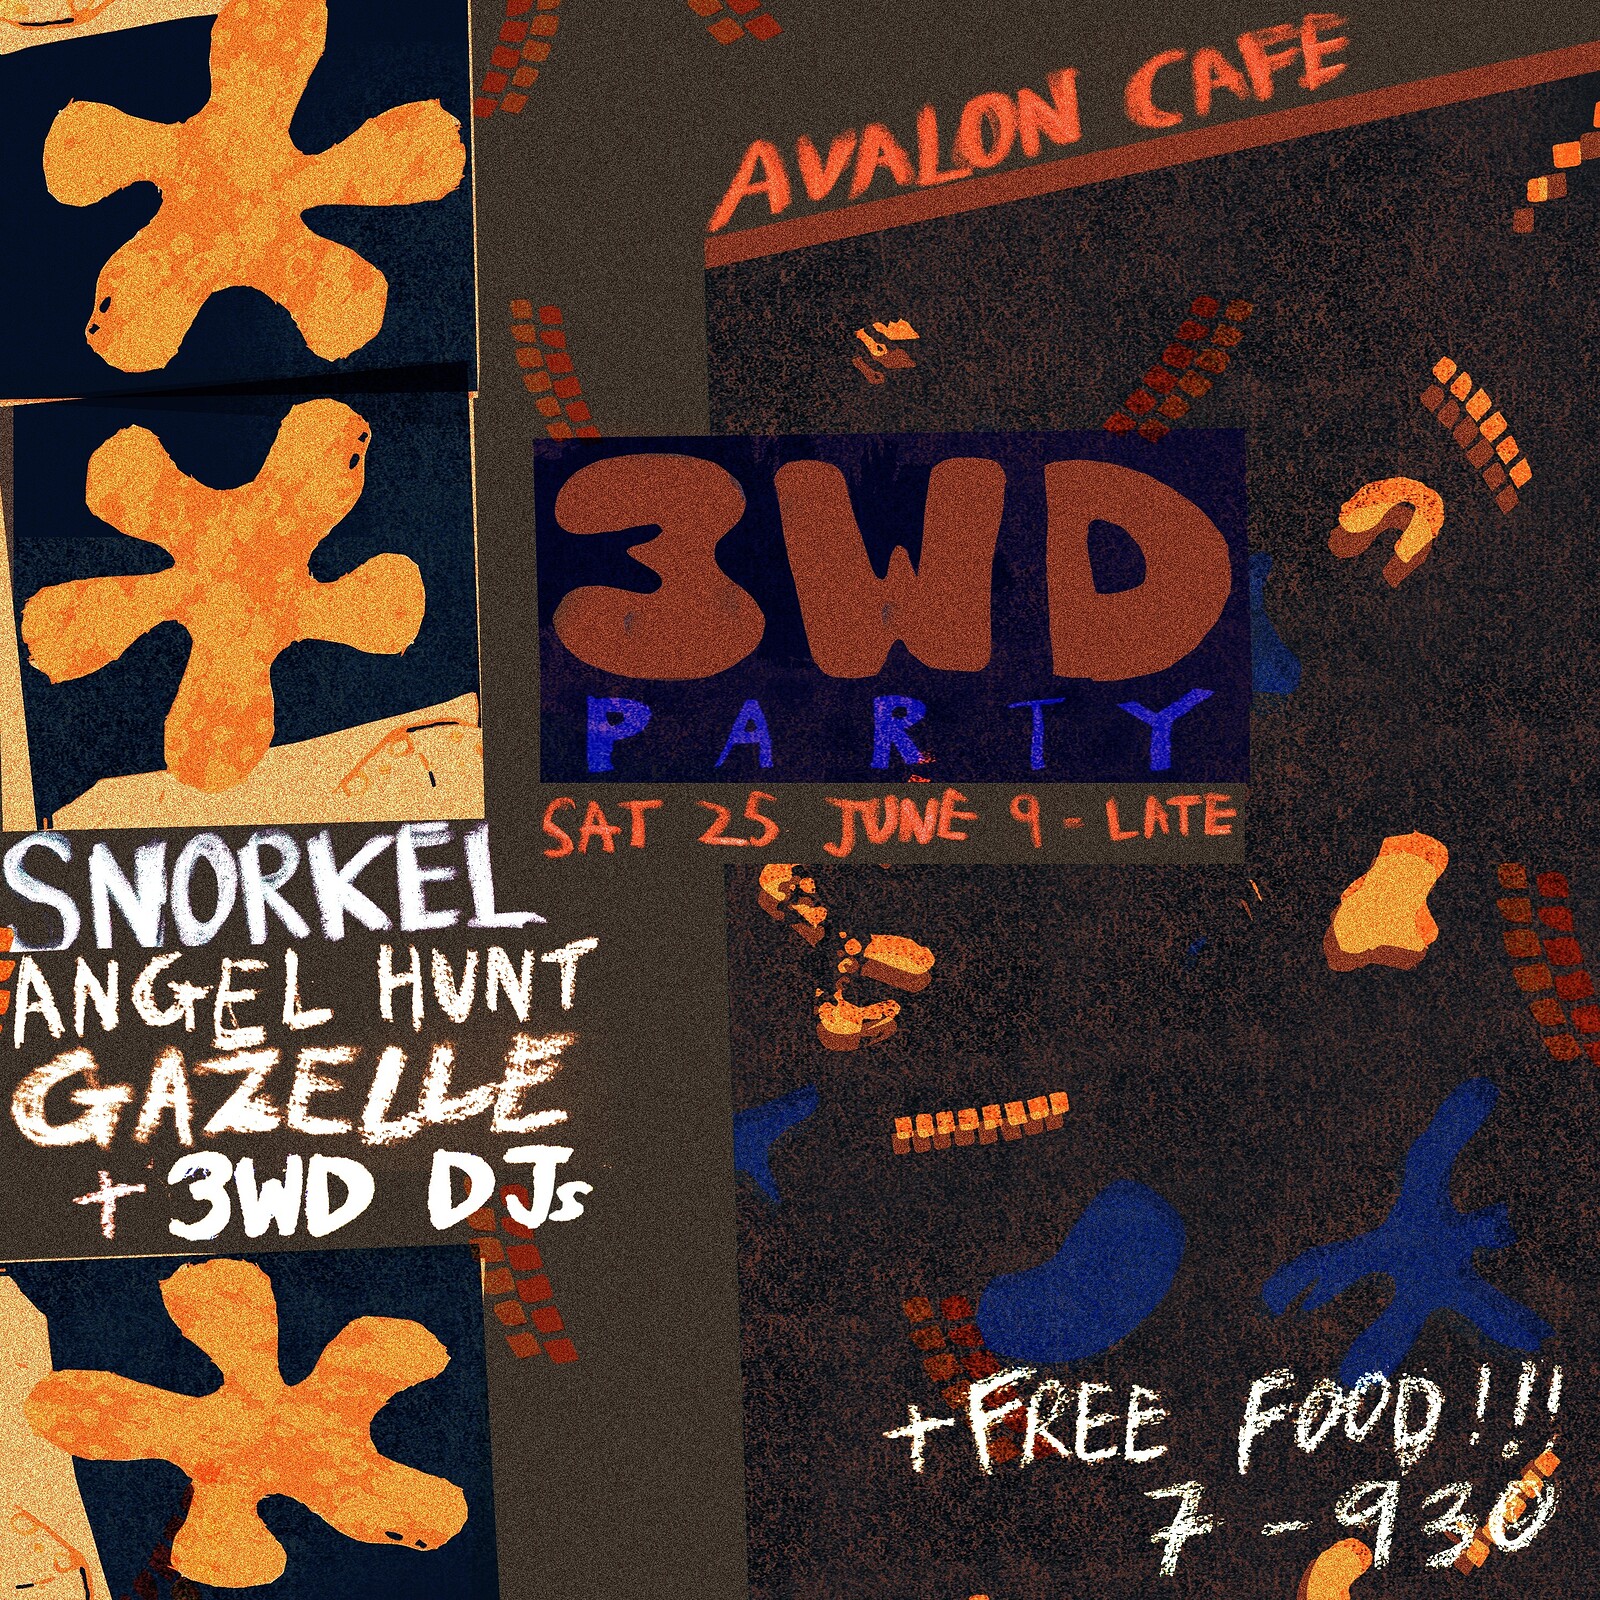 Three Wheel Drive Party at Avalon Cafe